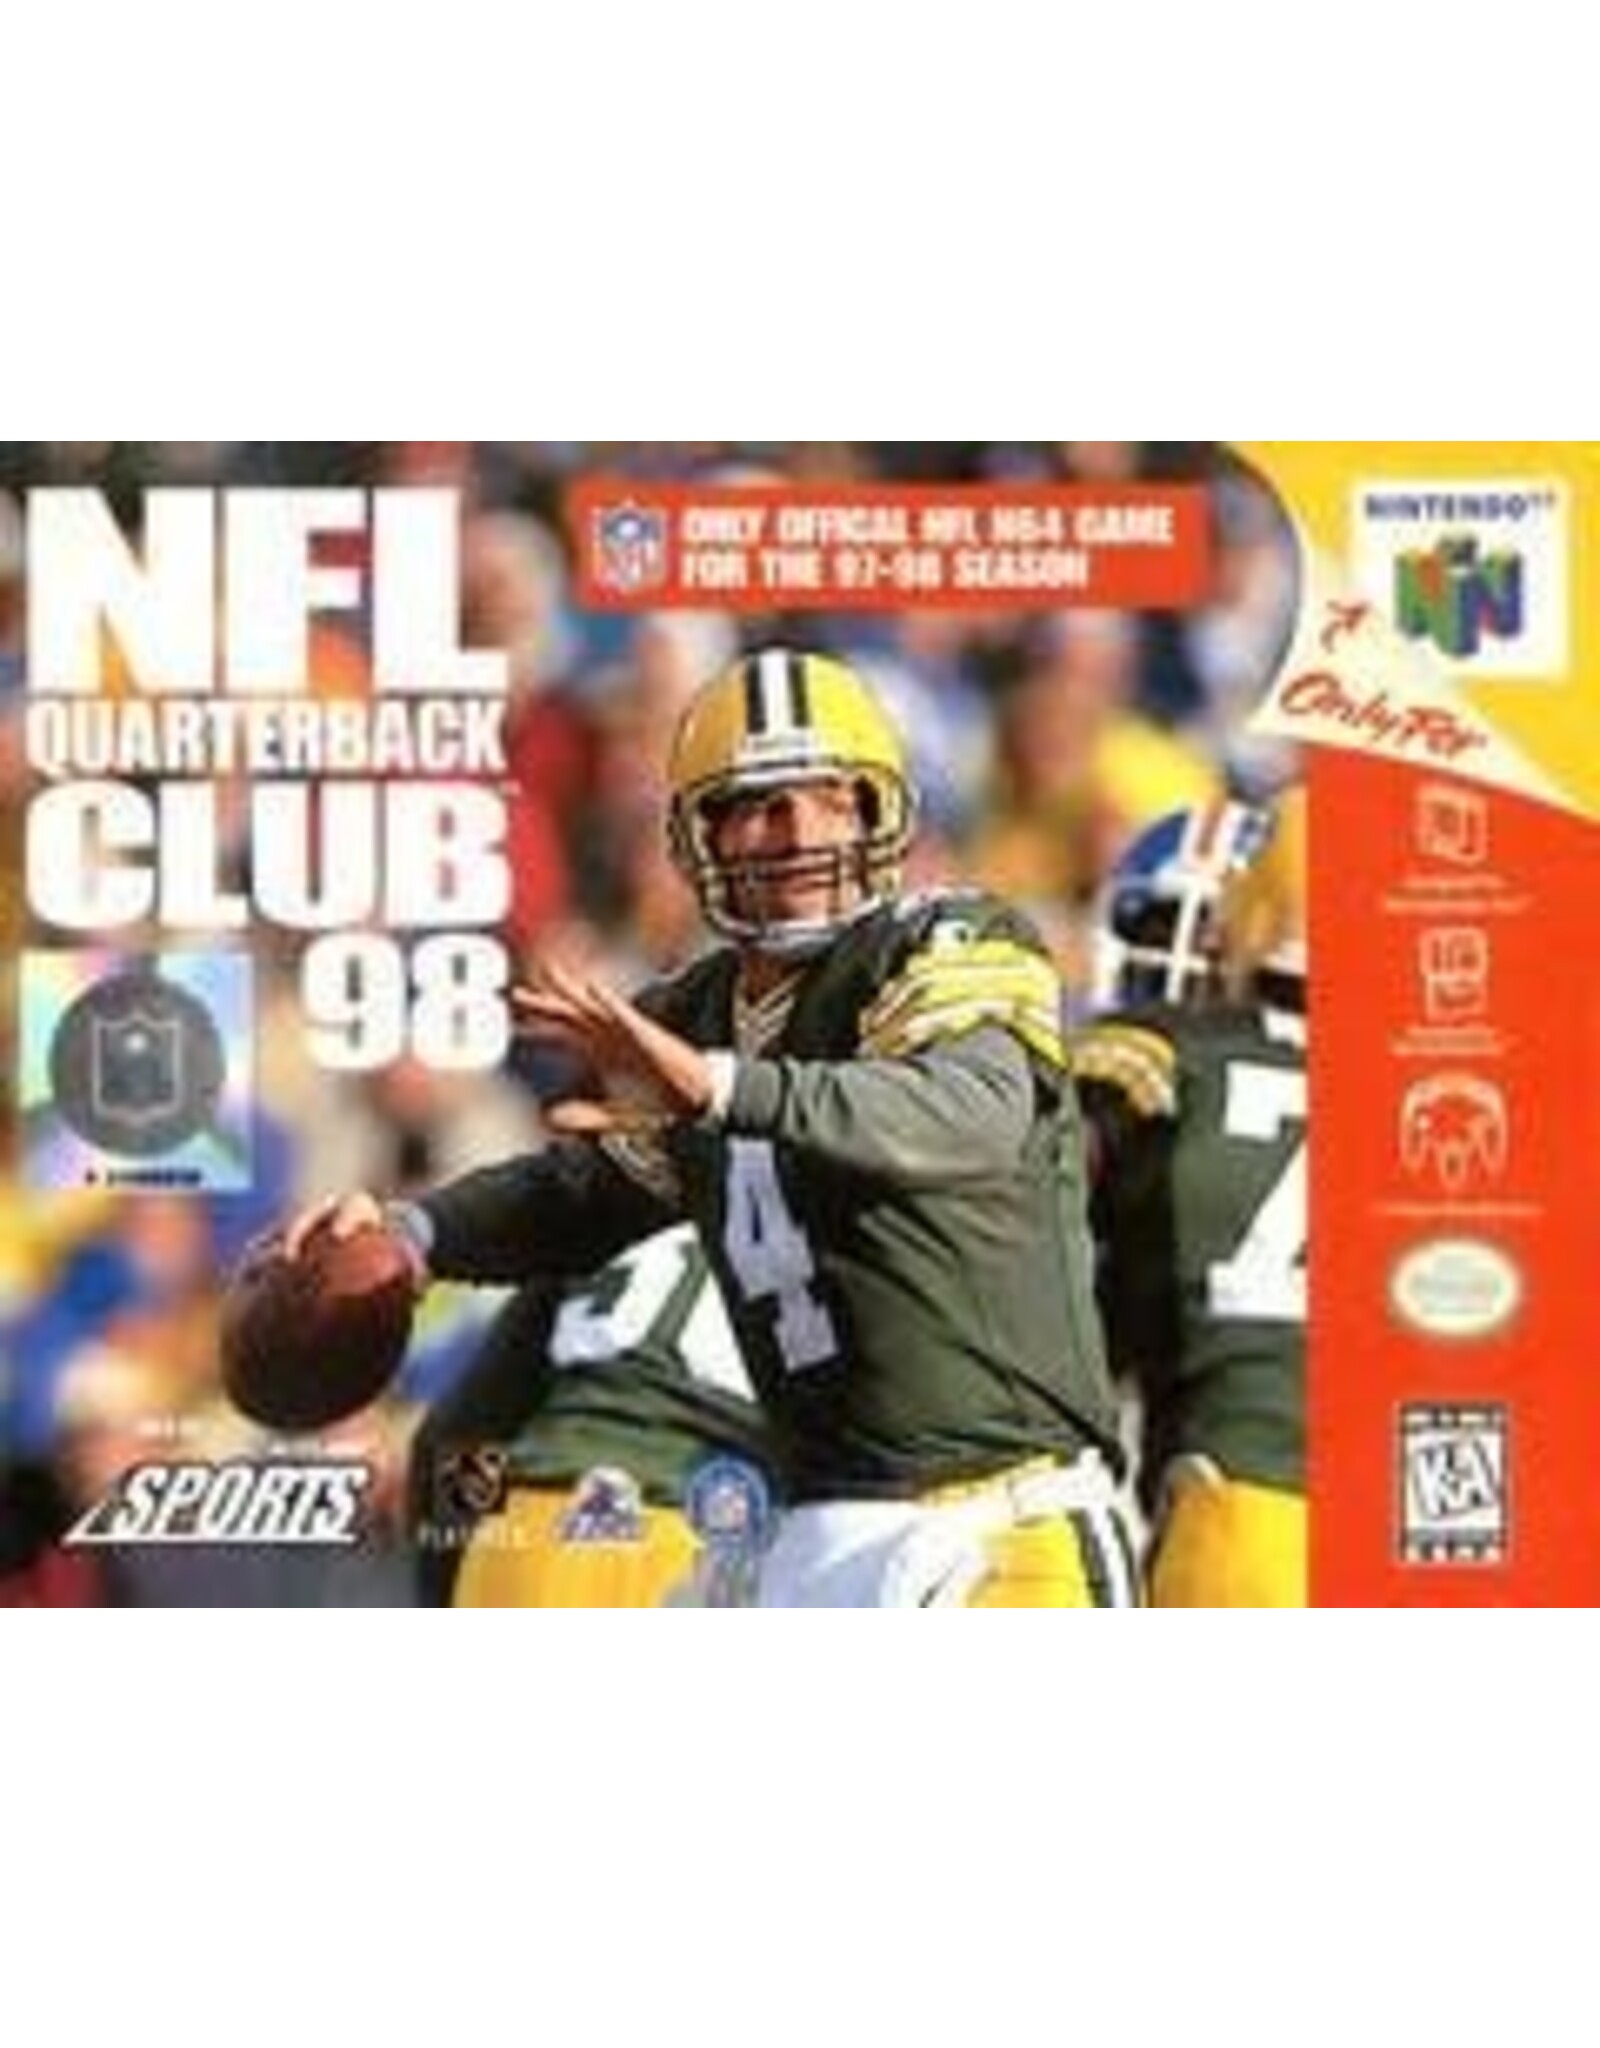 Nintendo 64 NFL Quarterback Club 98 (Cart Only, Damaged Front and Back Labels)